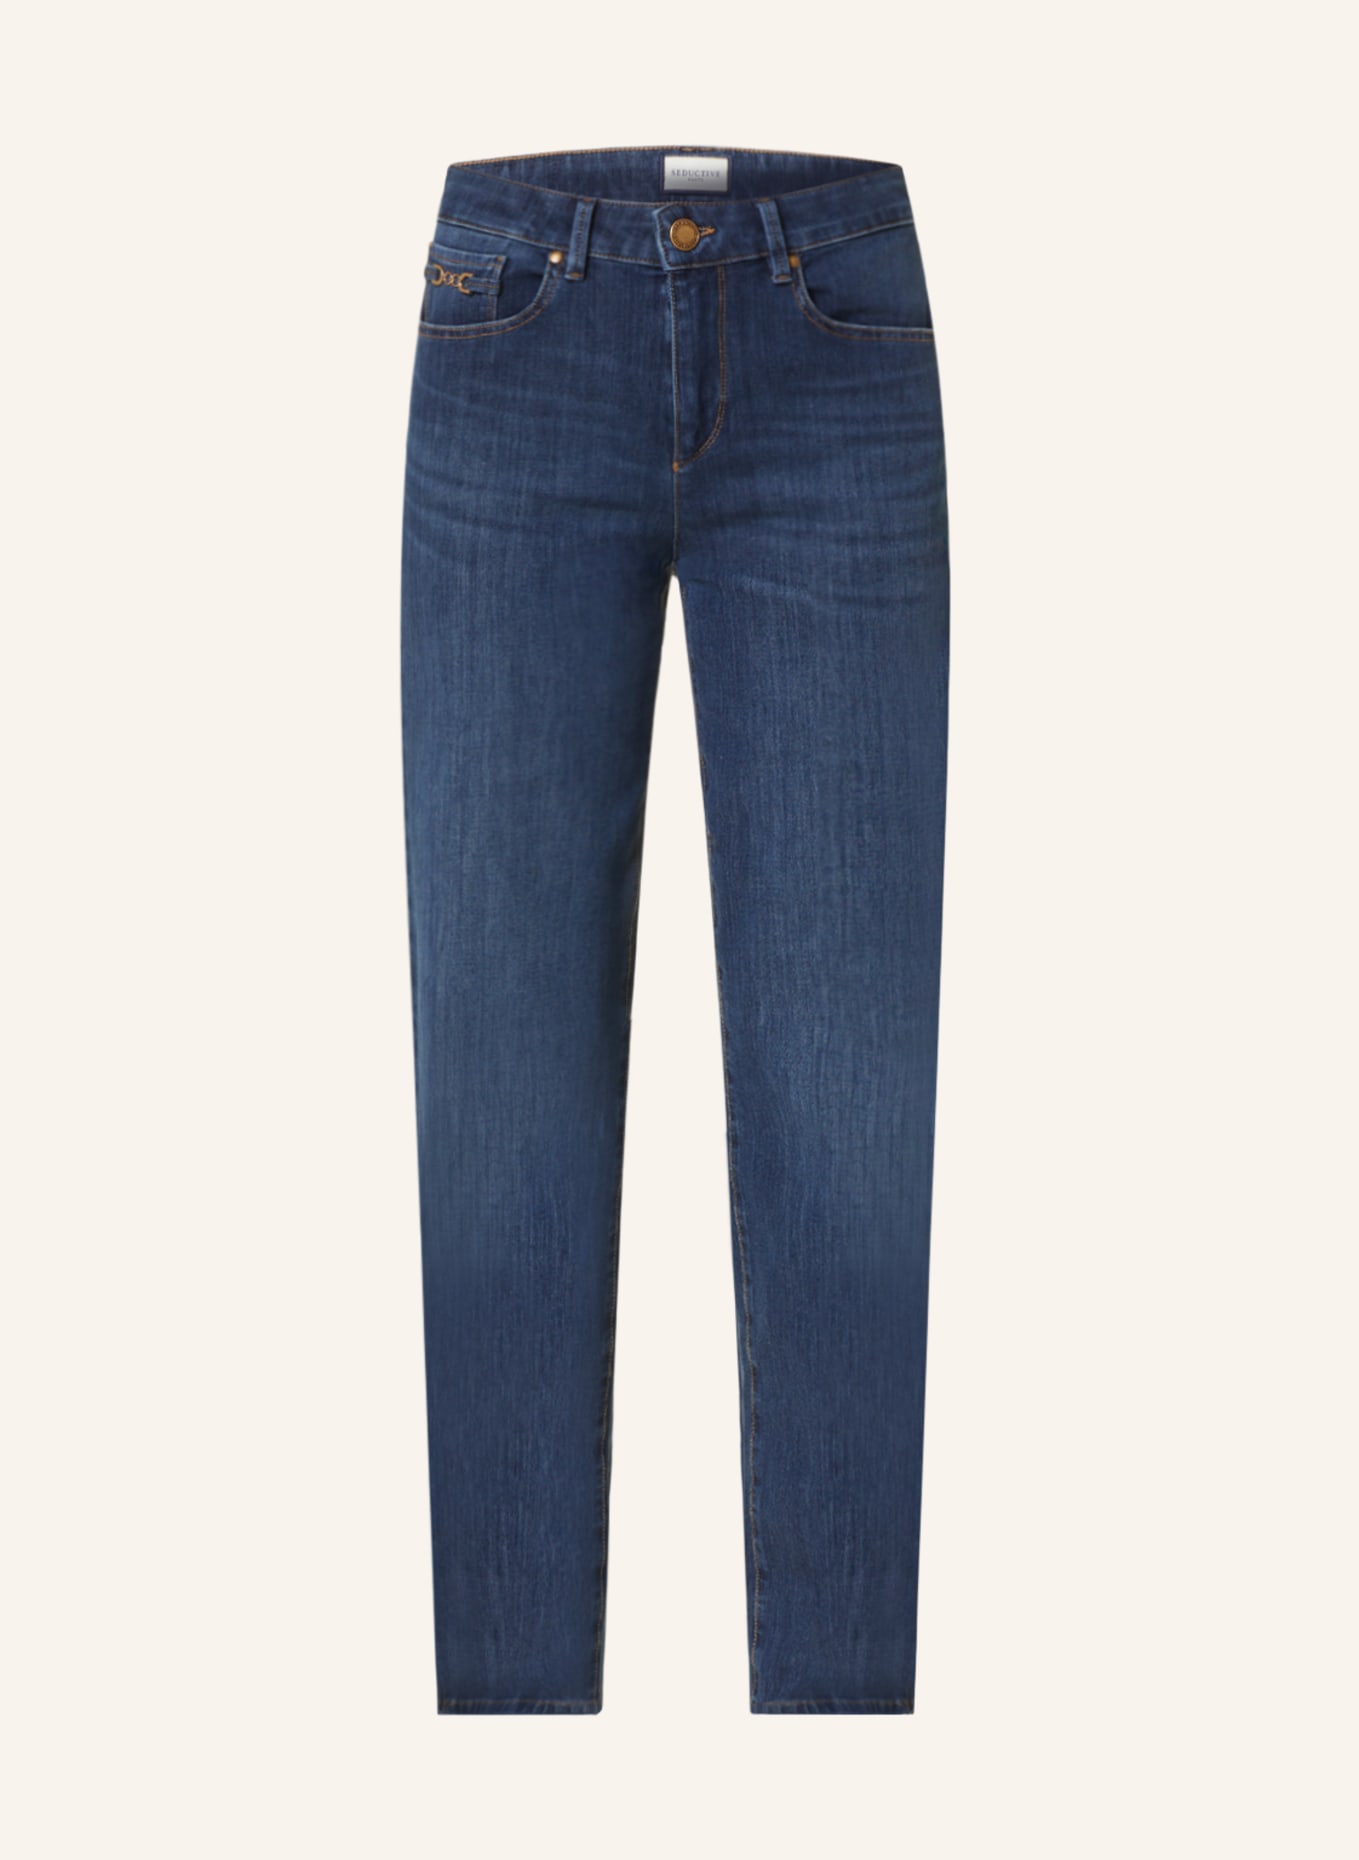 SEDUCTIVE Jeans MERON, Farbe: 858 moonlight blue (Bild 1)